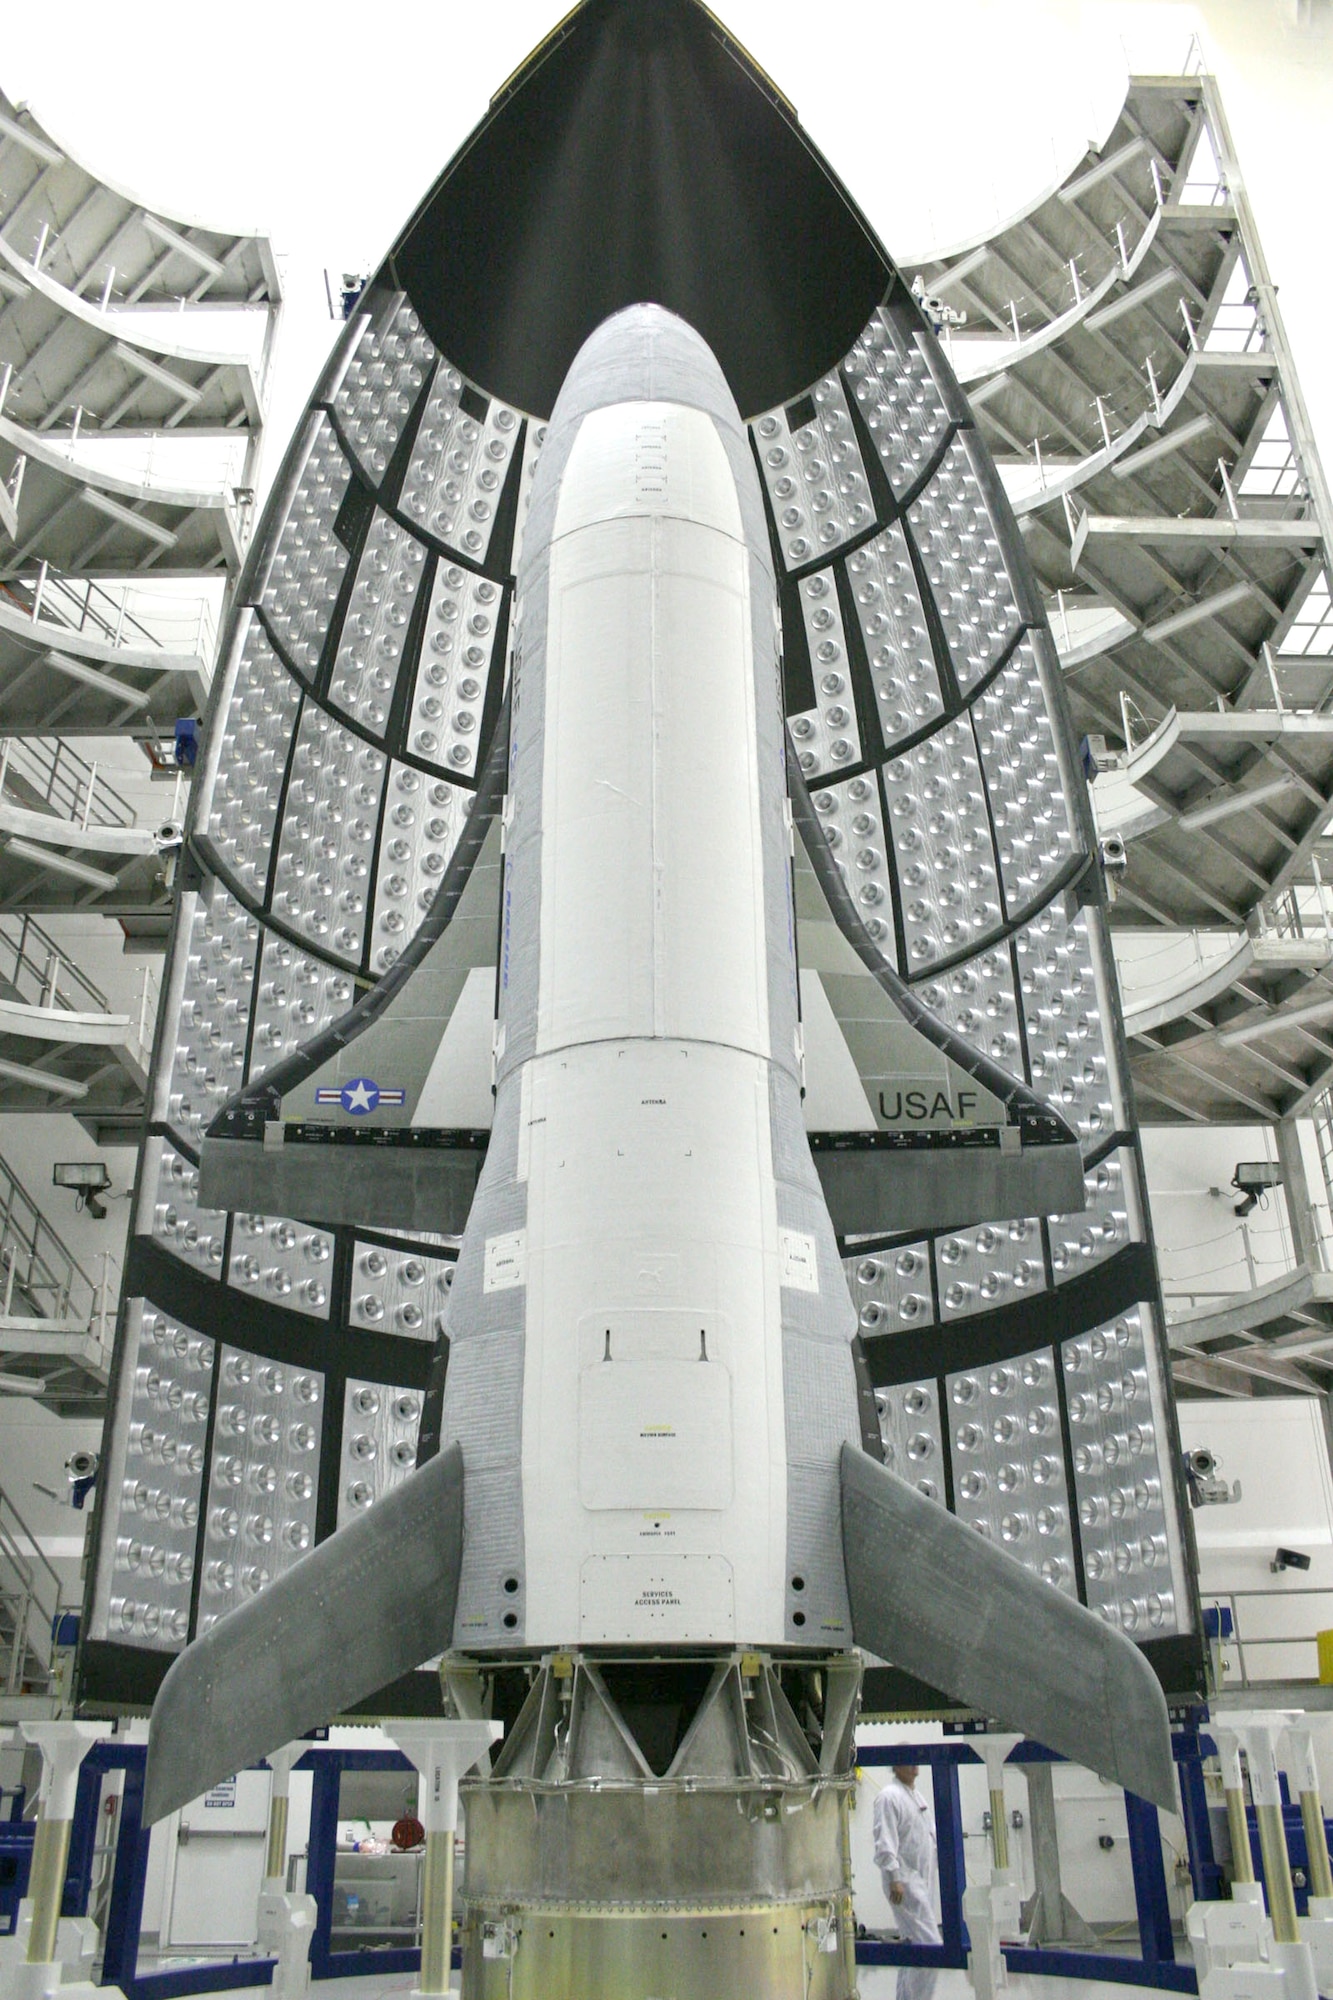 Boeing X-37B Orbital Test Vehicle